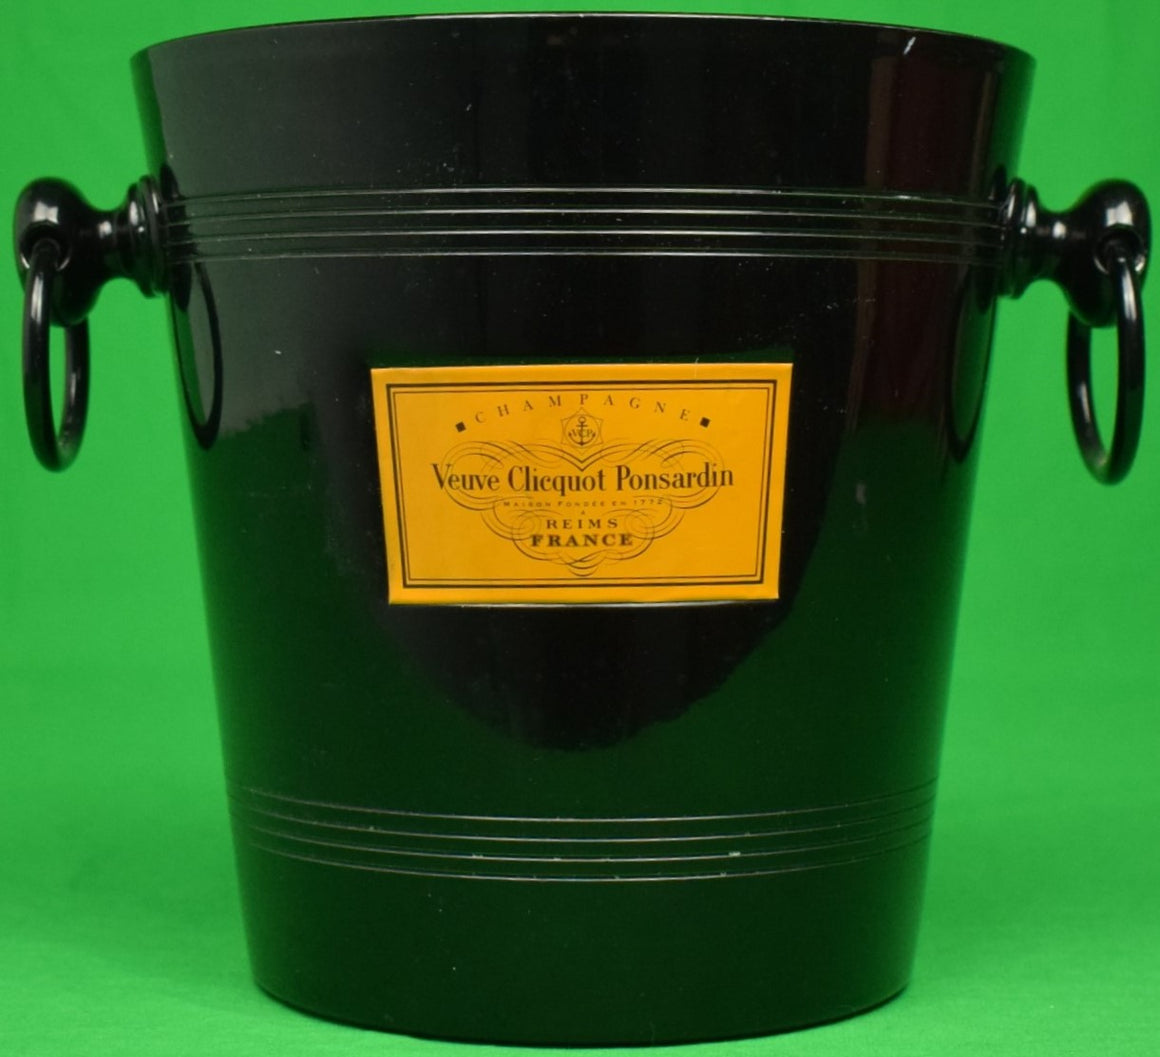 "Veuve Clicquot Ponsardin Black Metal Champagne Ice Bucket" (SOLD)